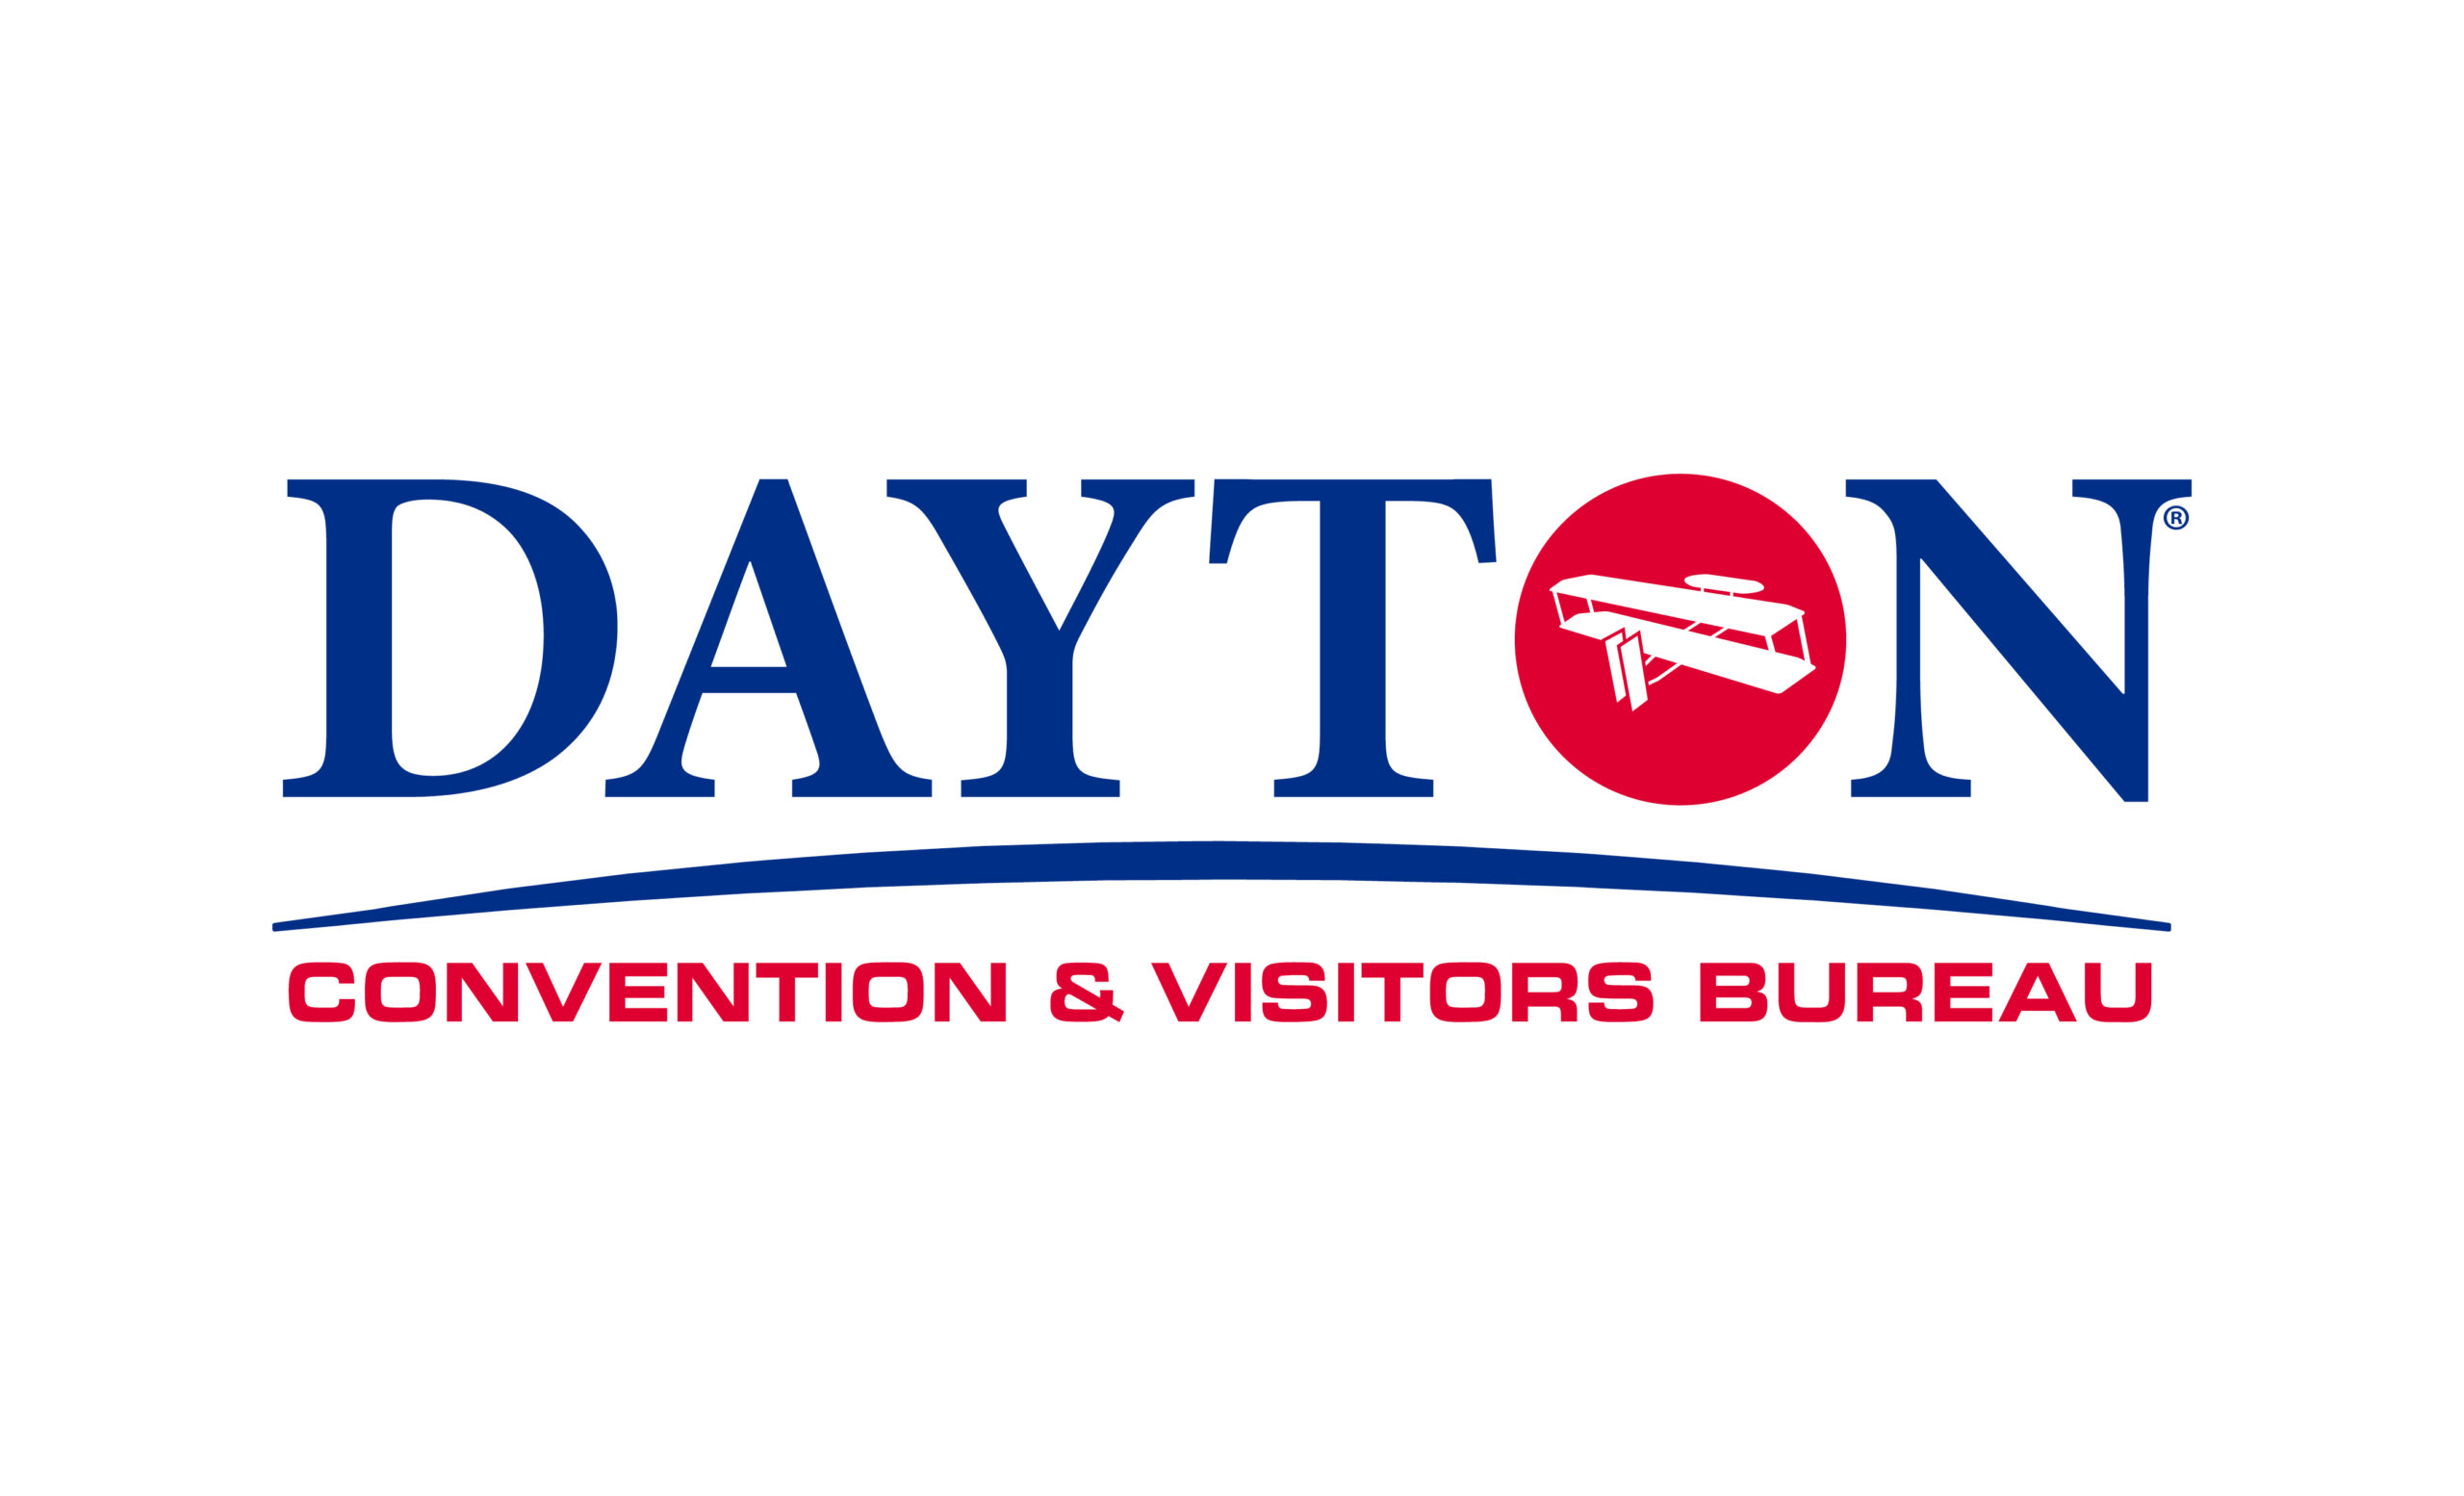 Dayton Convention & Visitors Bureau logo